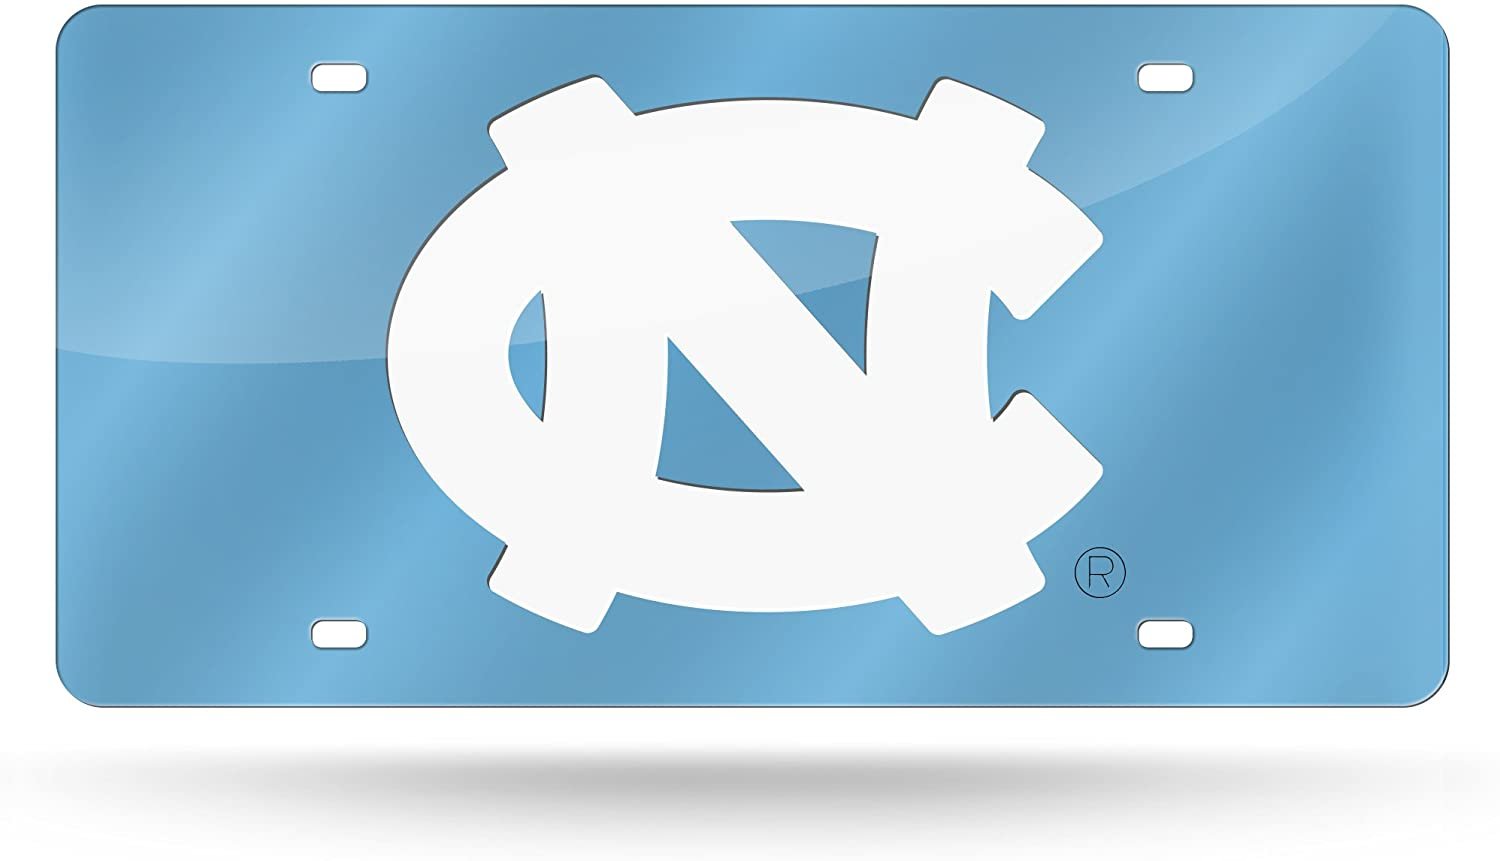 University of North Carolina Tar Heels Laser Cut Tag License Plate, Blue, Mirrored Acrylic Inlaid, 12x6 Inch